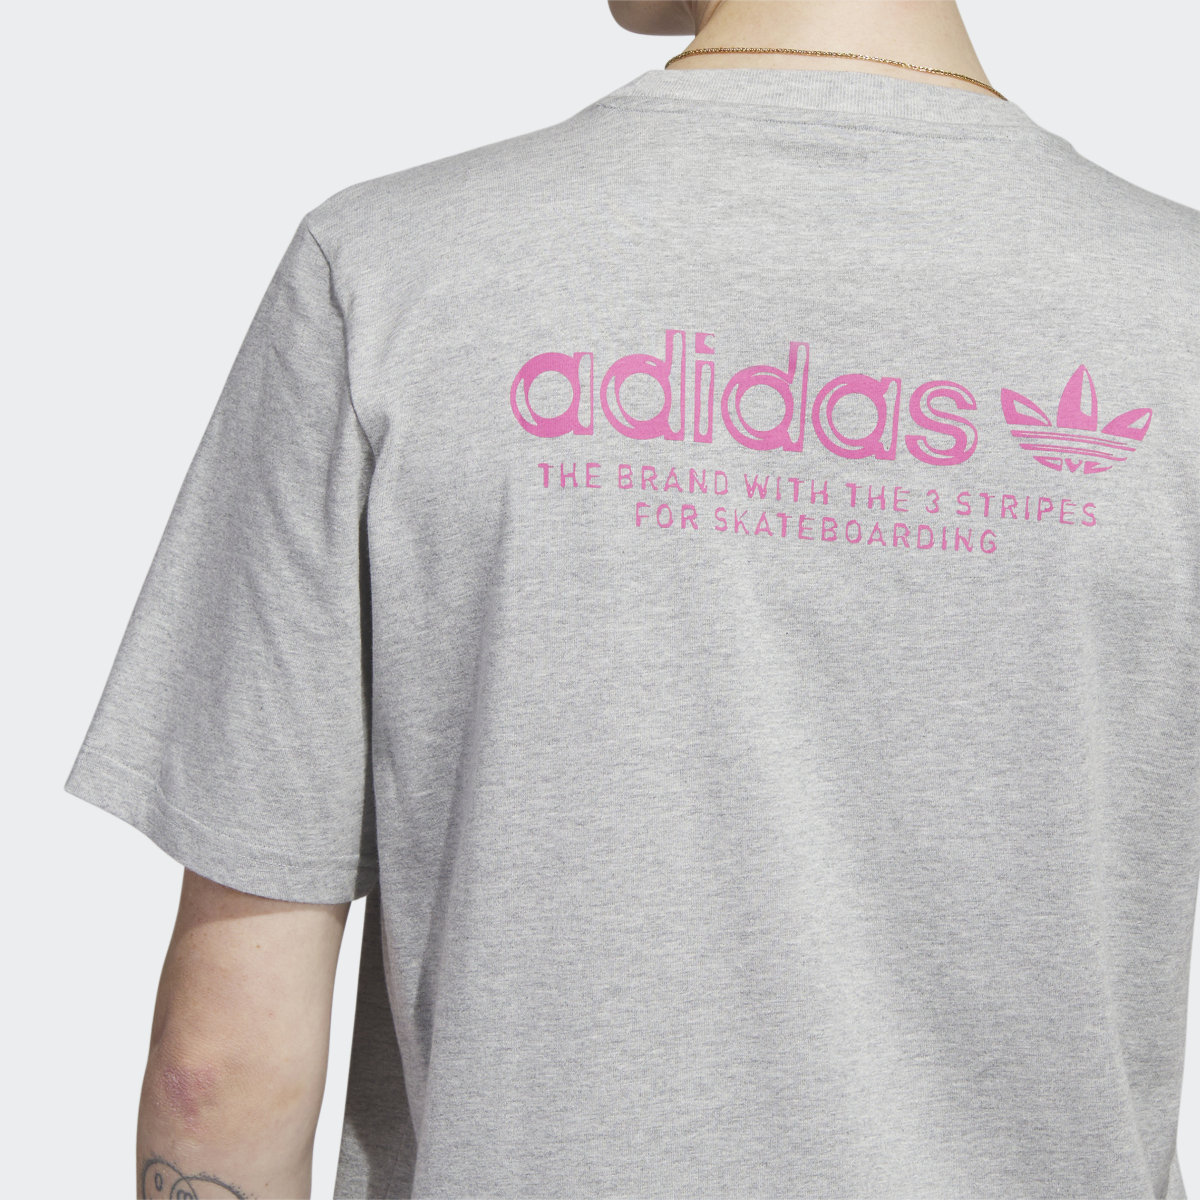 Adidas T-shirt 4.0. 7